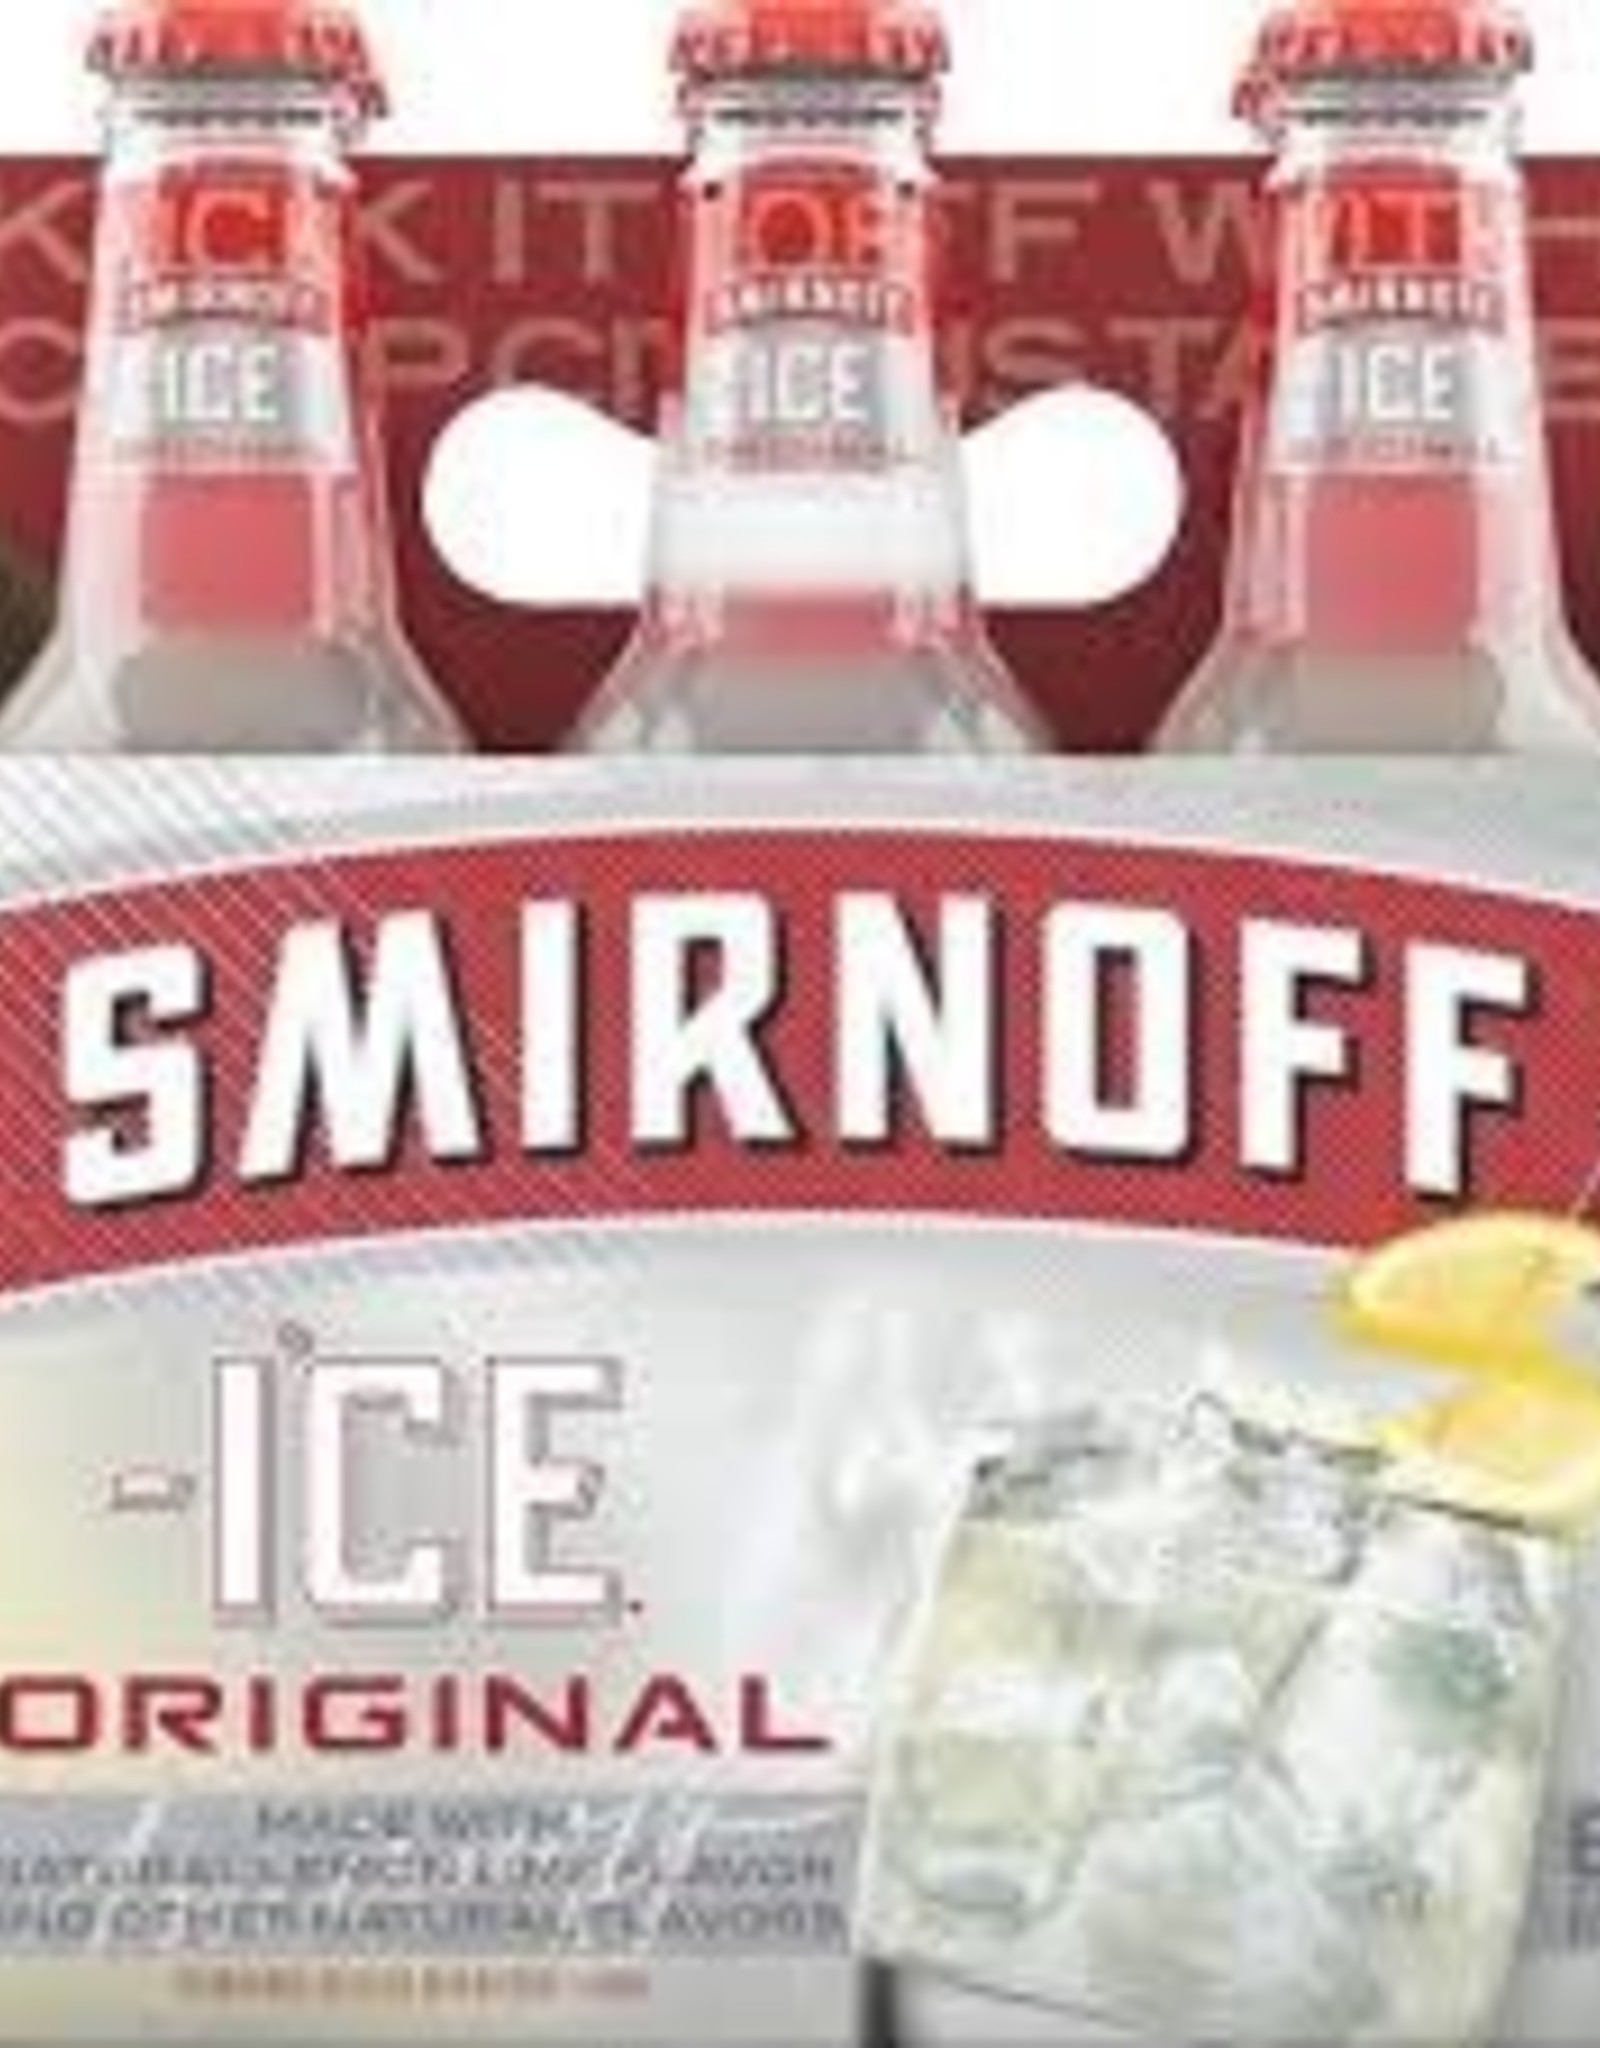 Smirnoff Smirnoff - Ice - Original - 6 pk - 11.2oz - Bottles